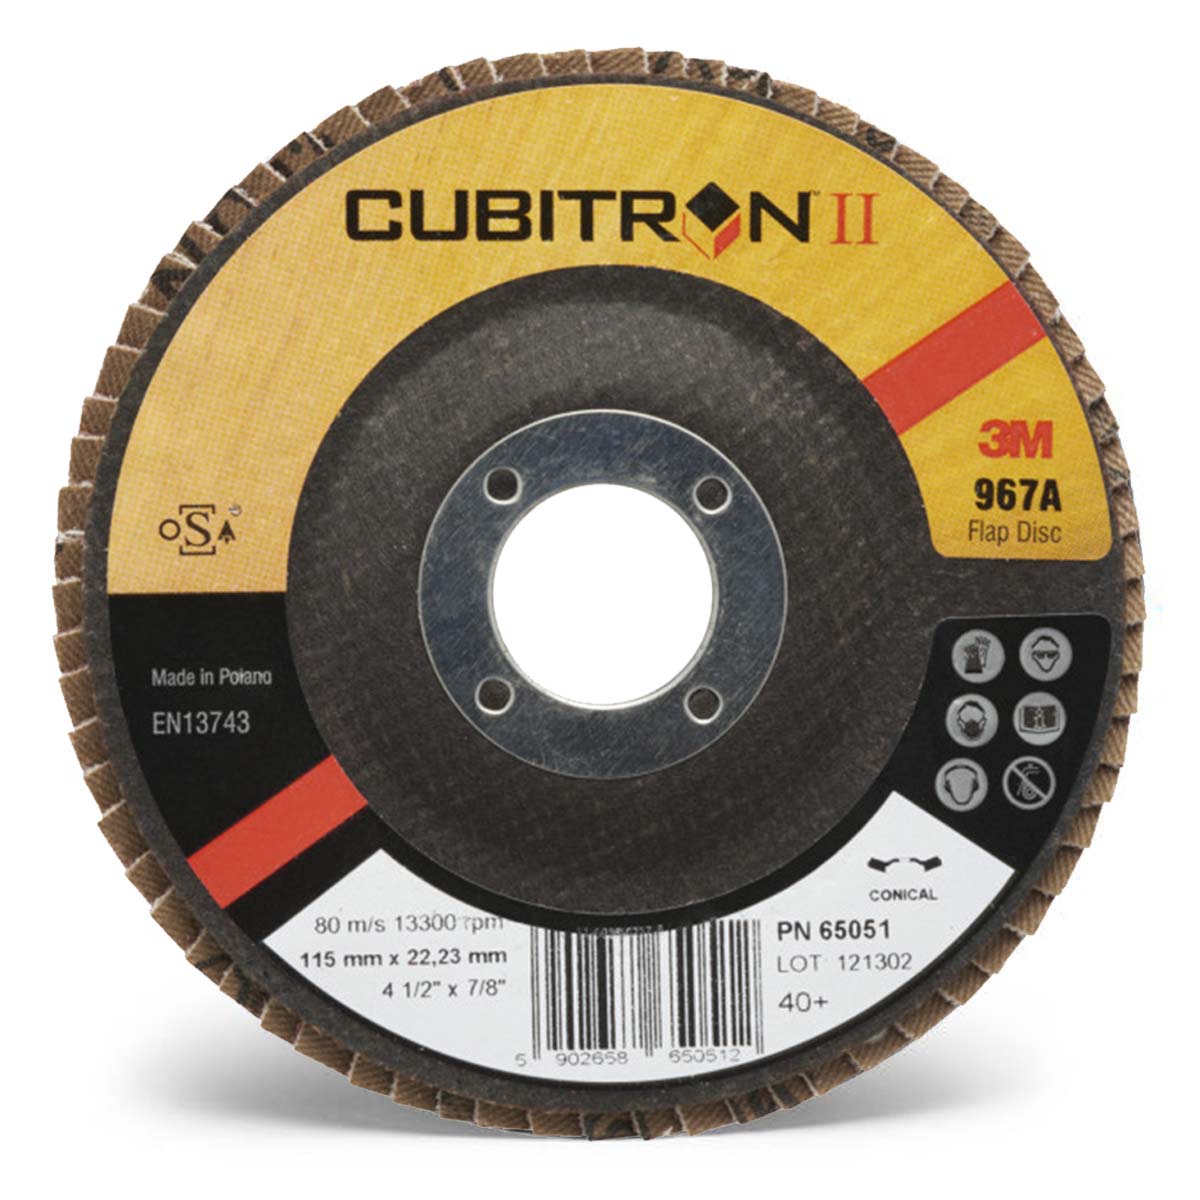 100 disques abrasifs support fibre 3M Cubitron II 982C grain 60+, 125 x 22  mm - AFS - Application Fast Set